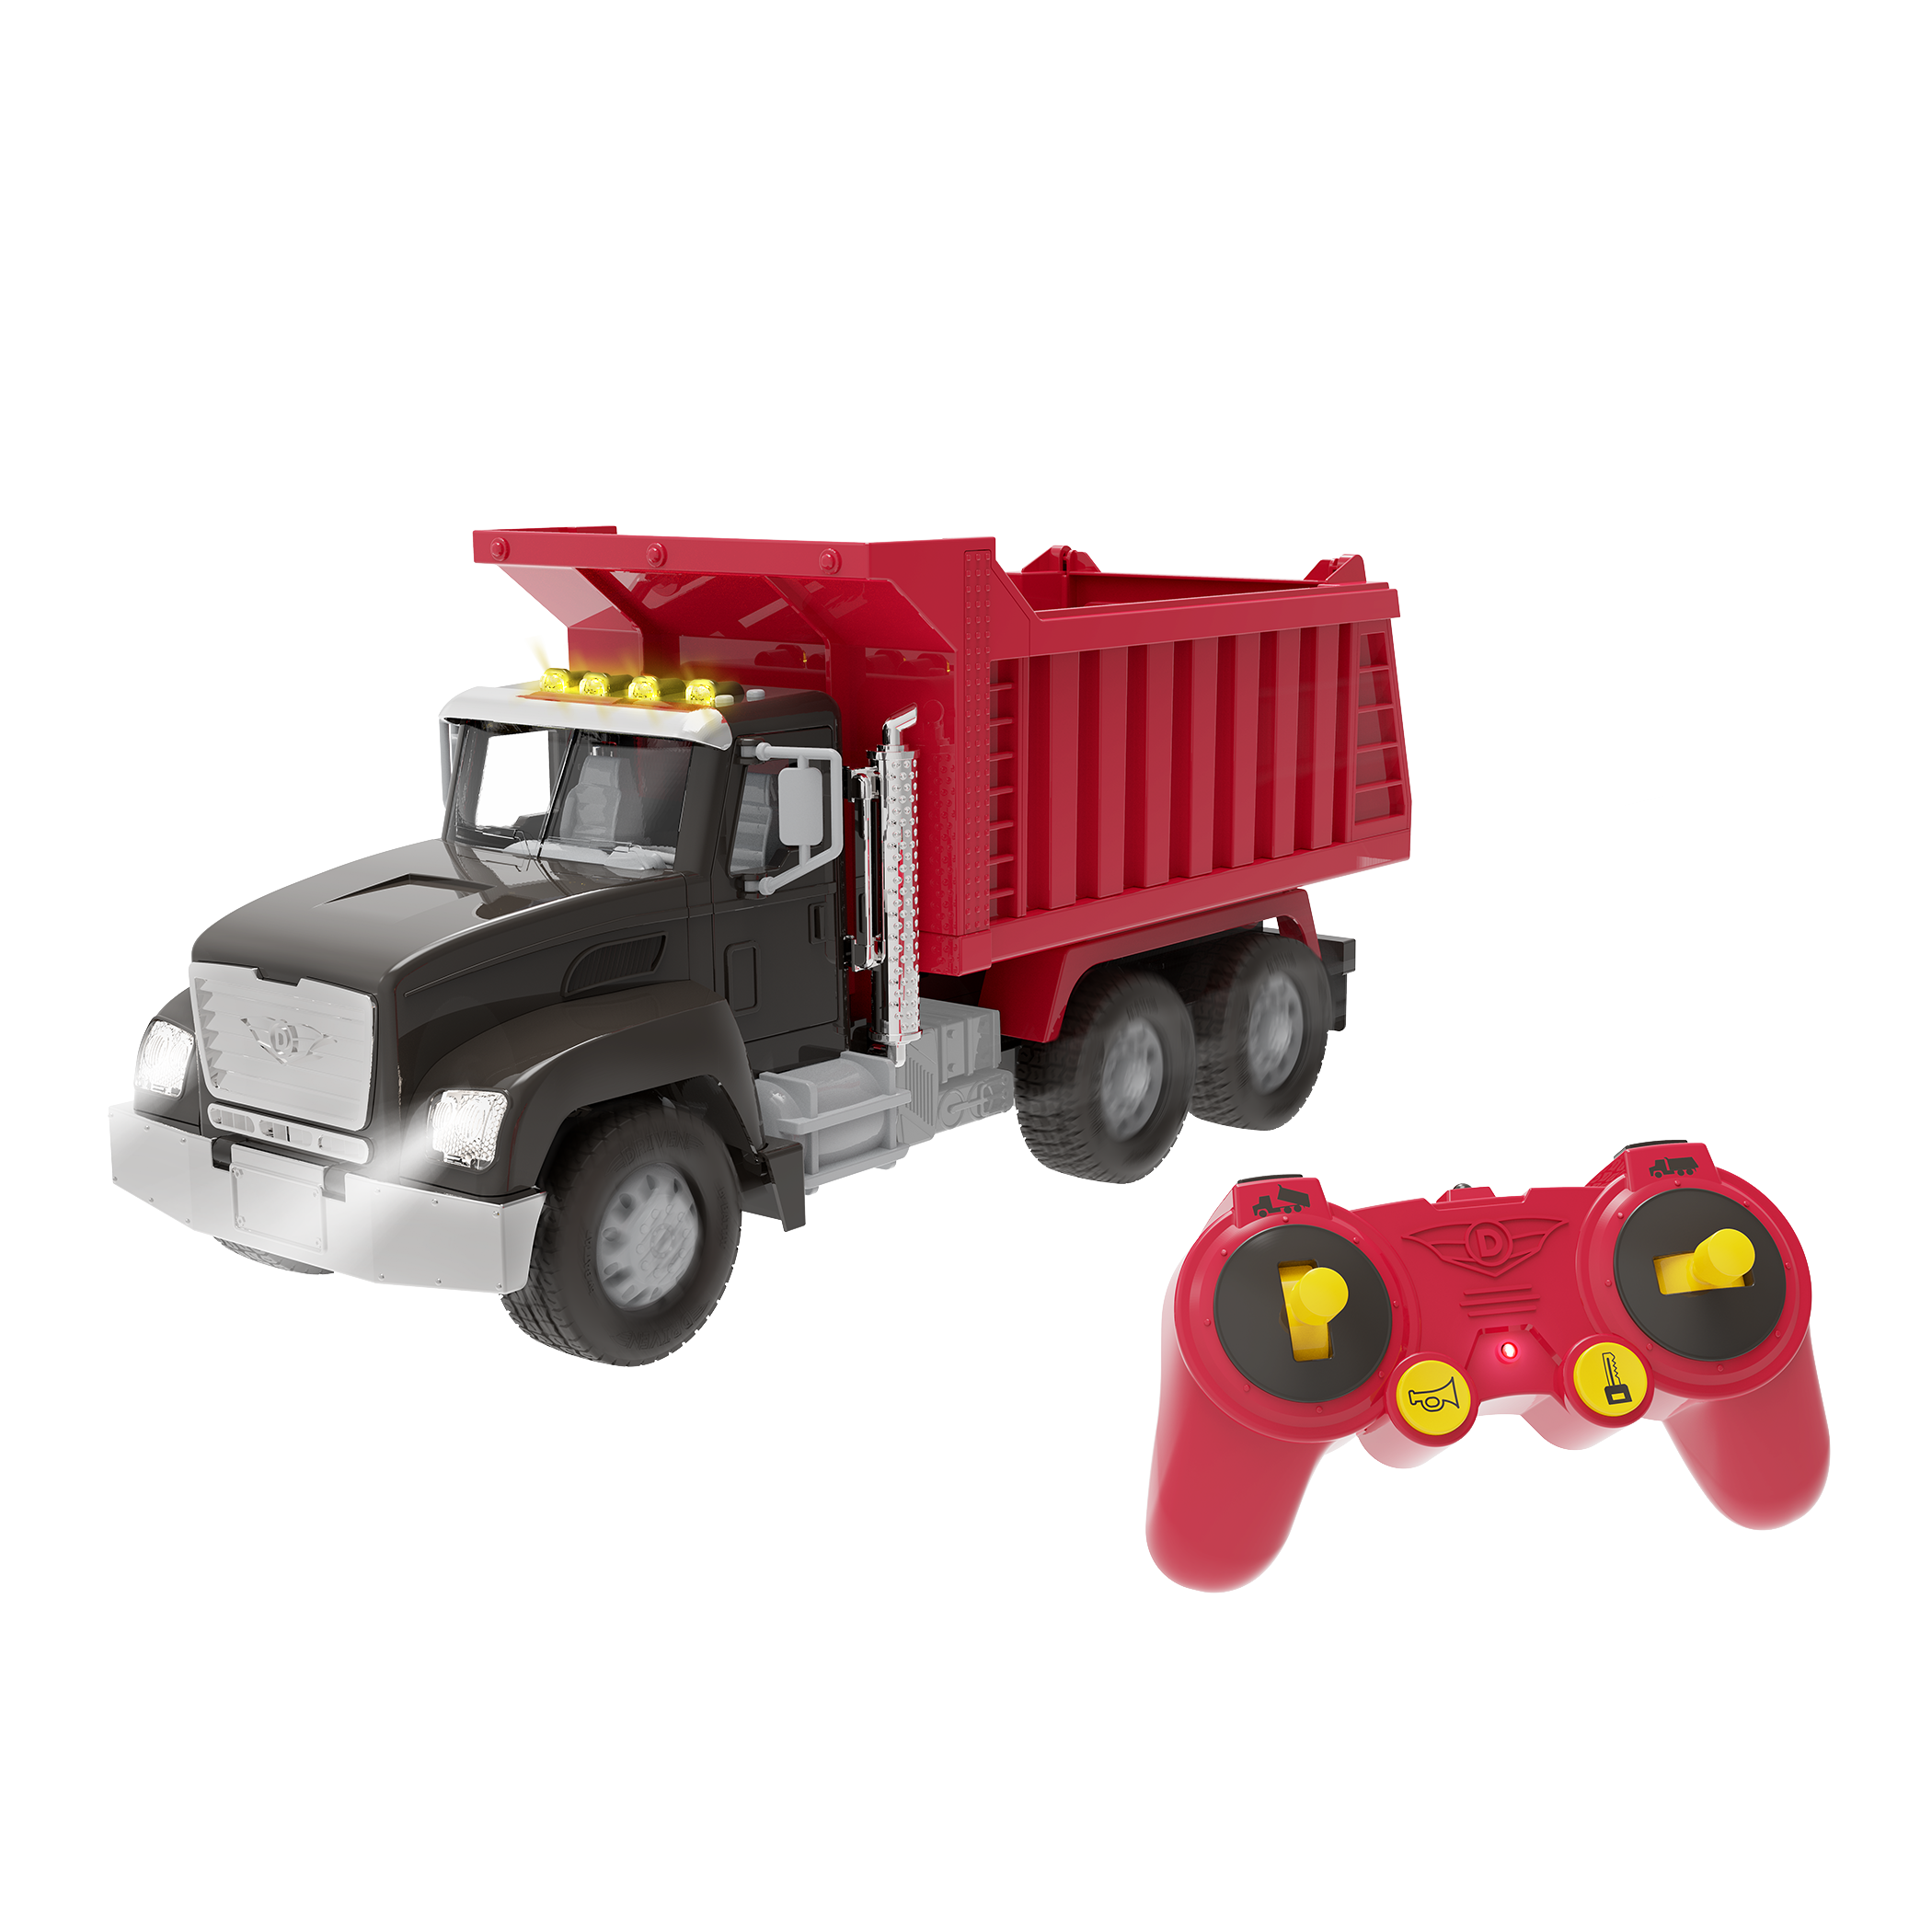 R/C Standard Dump Truck | Remote Control Cars & Toy Trucks